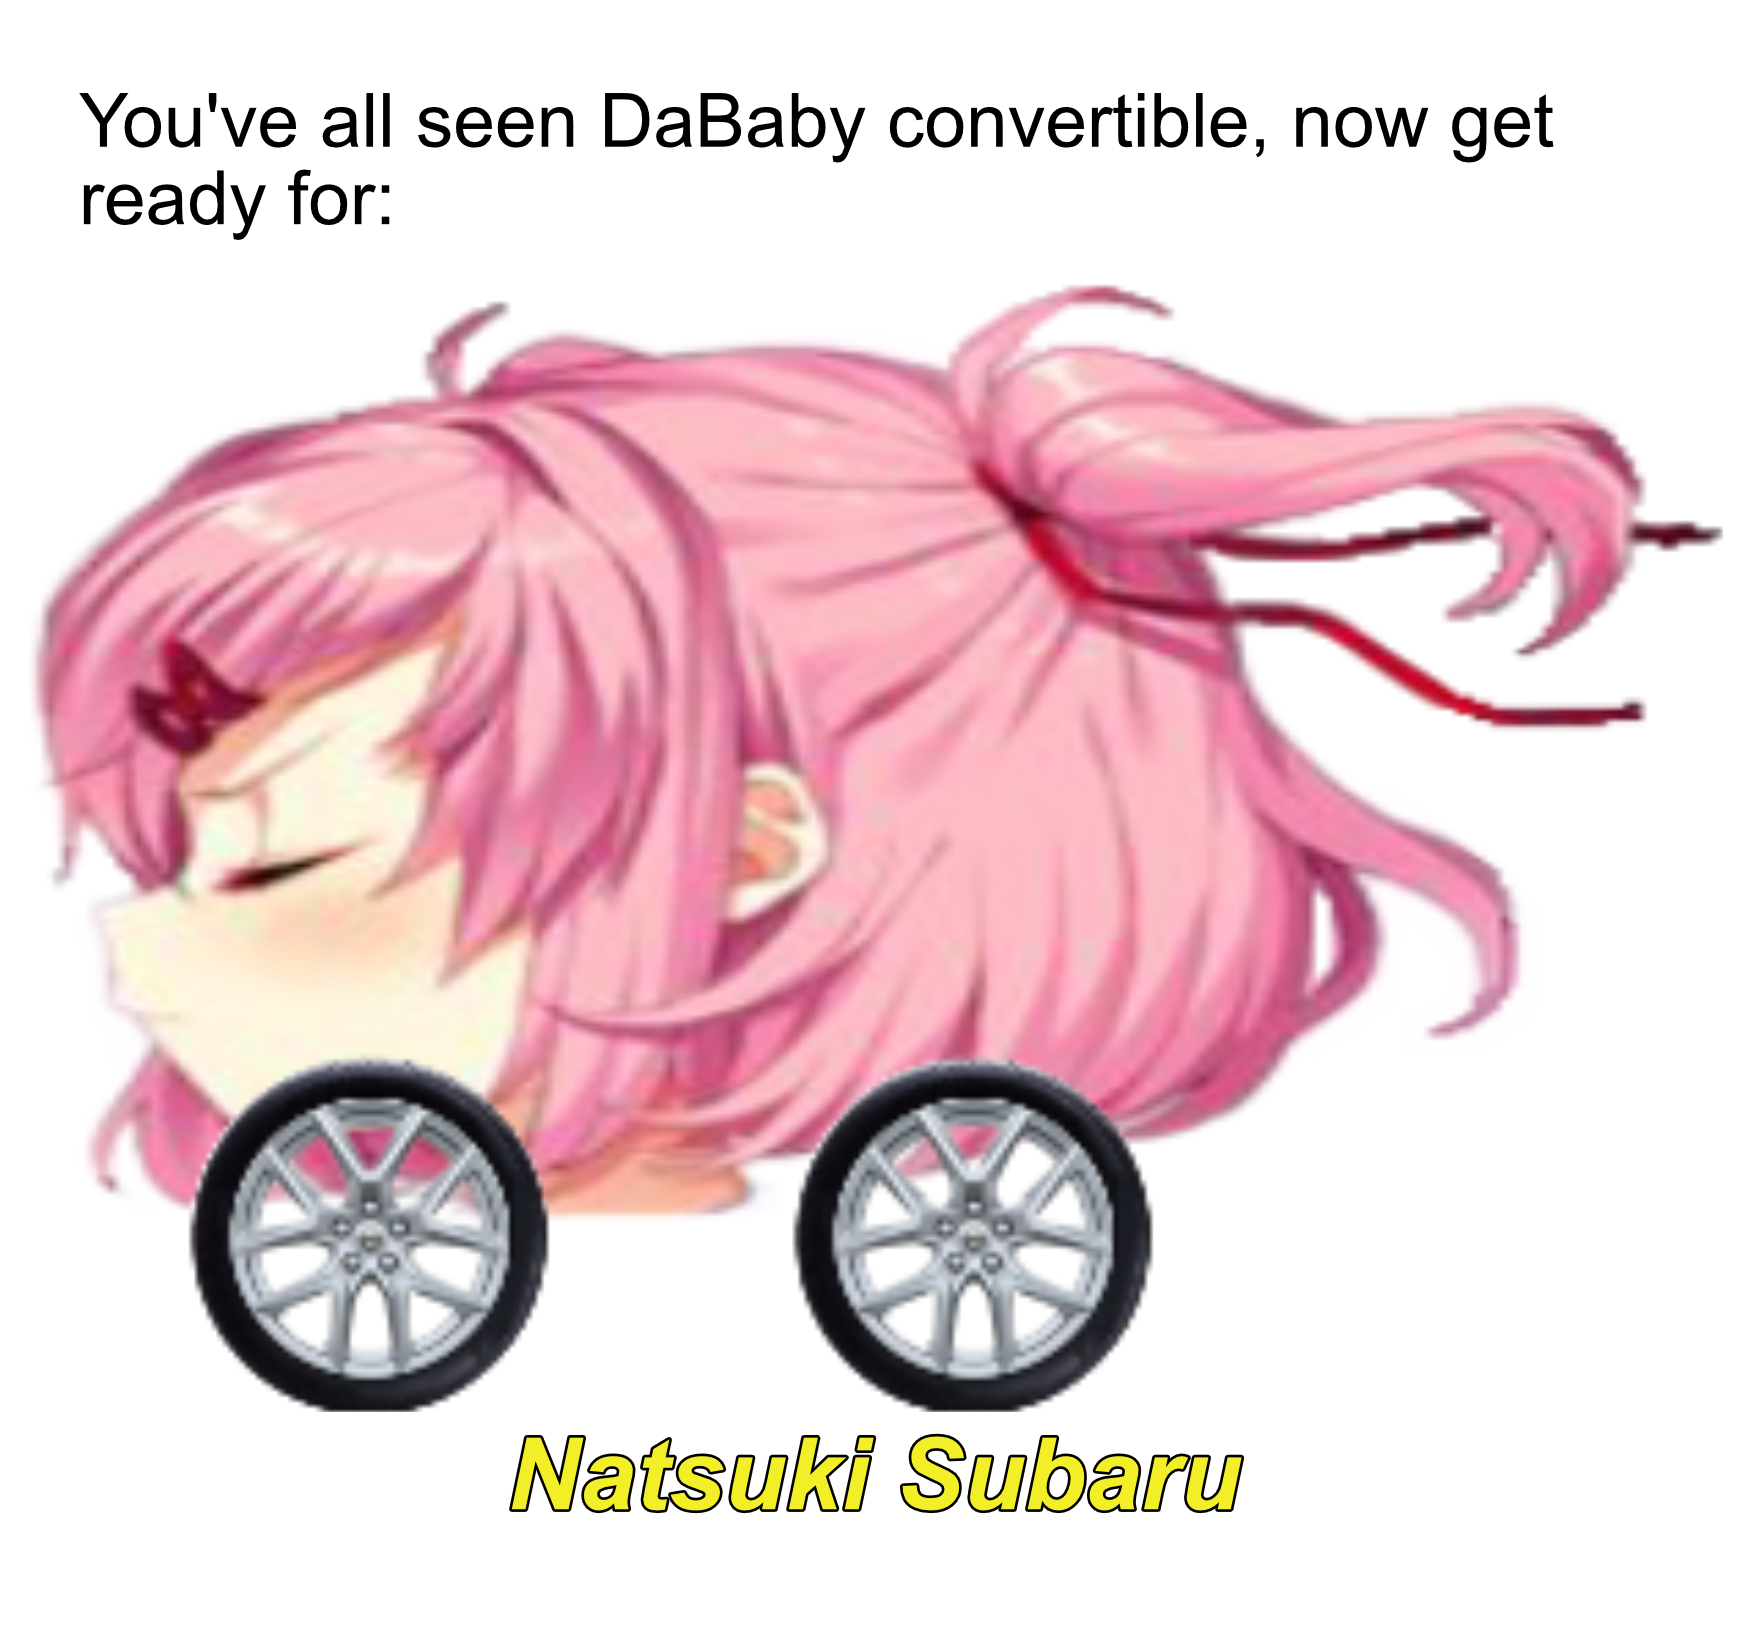 Natsuki Subaru go brrrrr